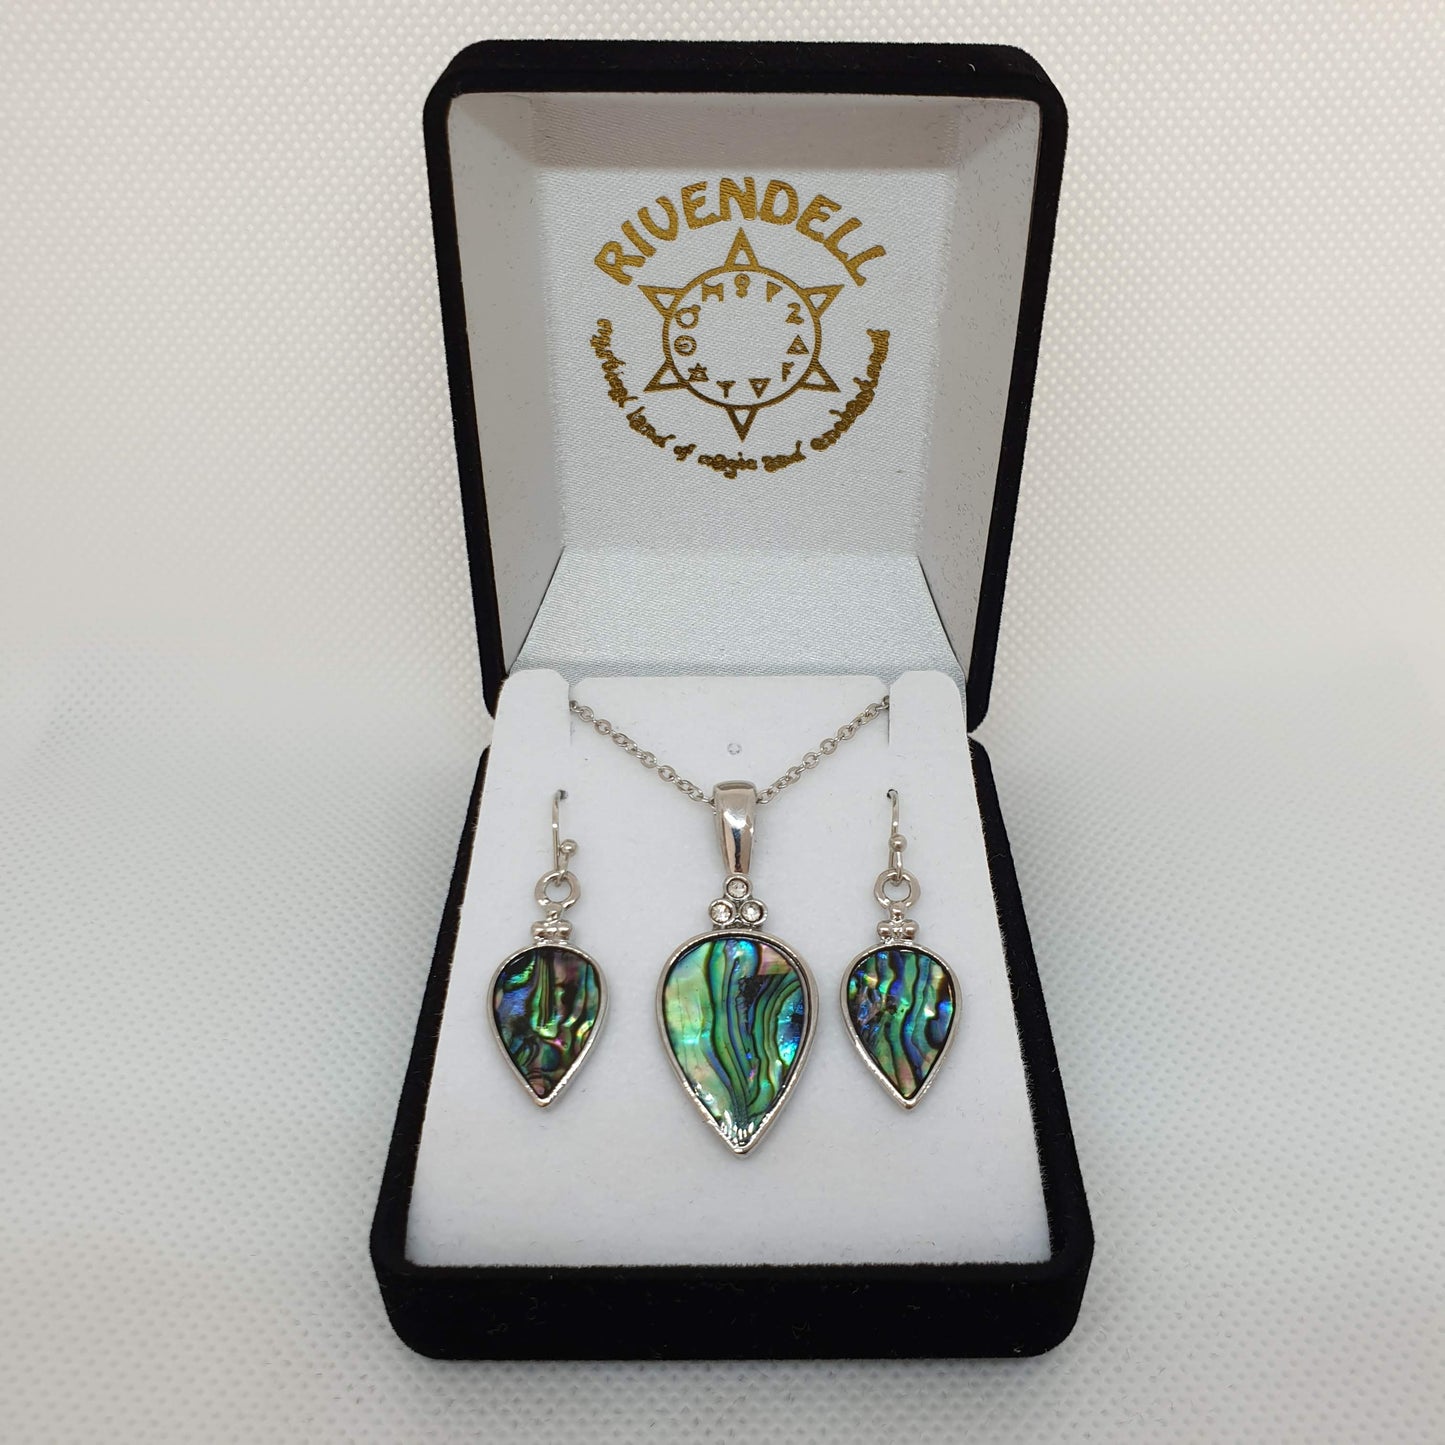 Paua Necklace and Earrings Set - Rivendell Shop